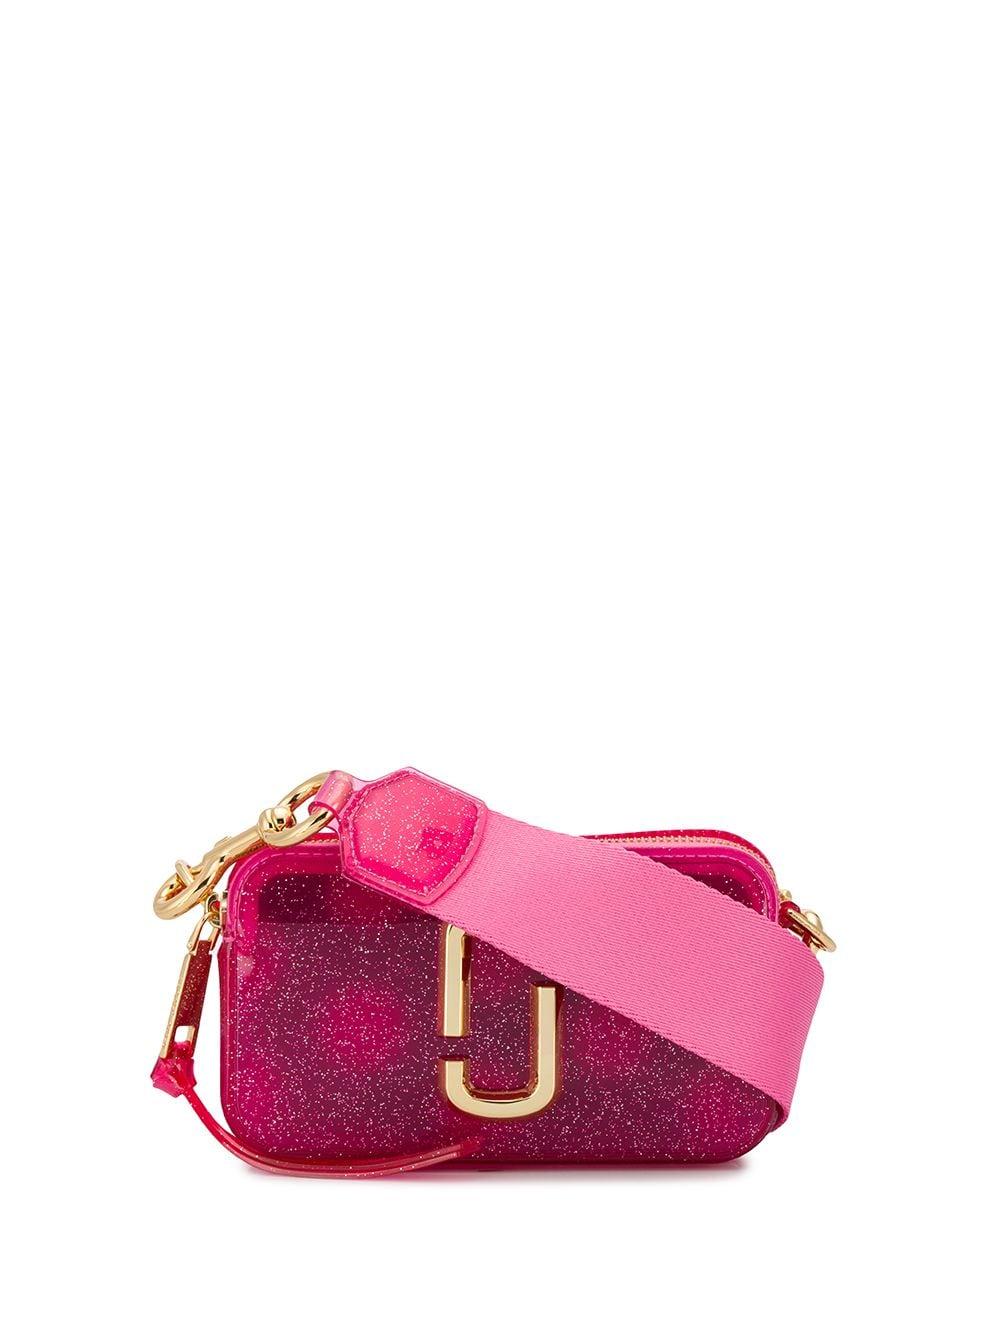 marc jacobs pink snapshot bag｜TikTok Search